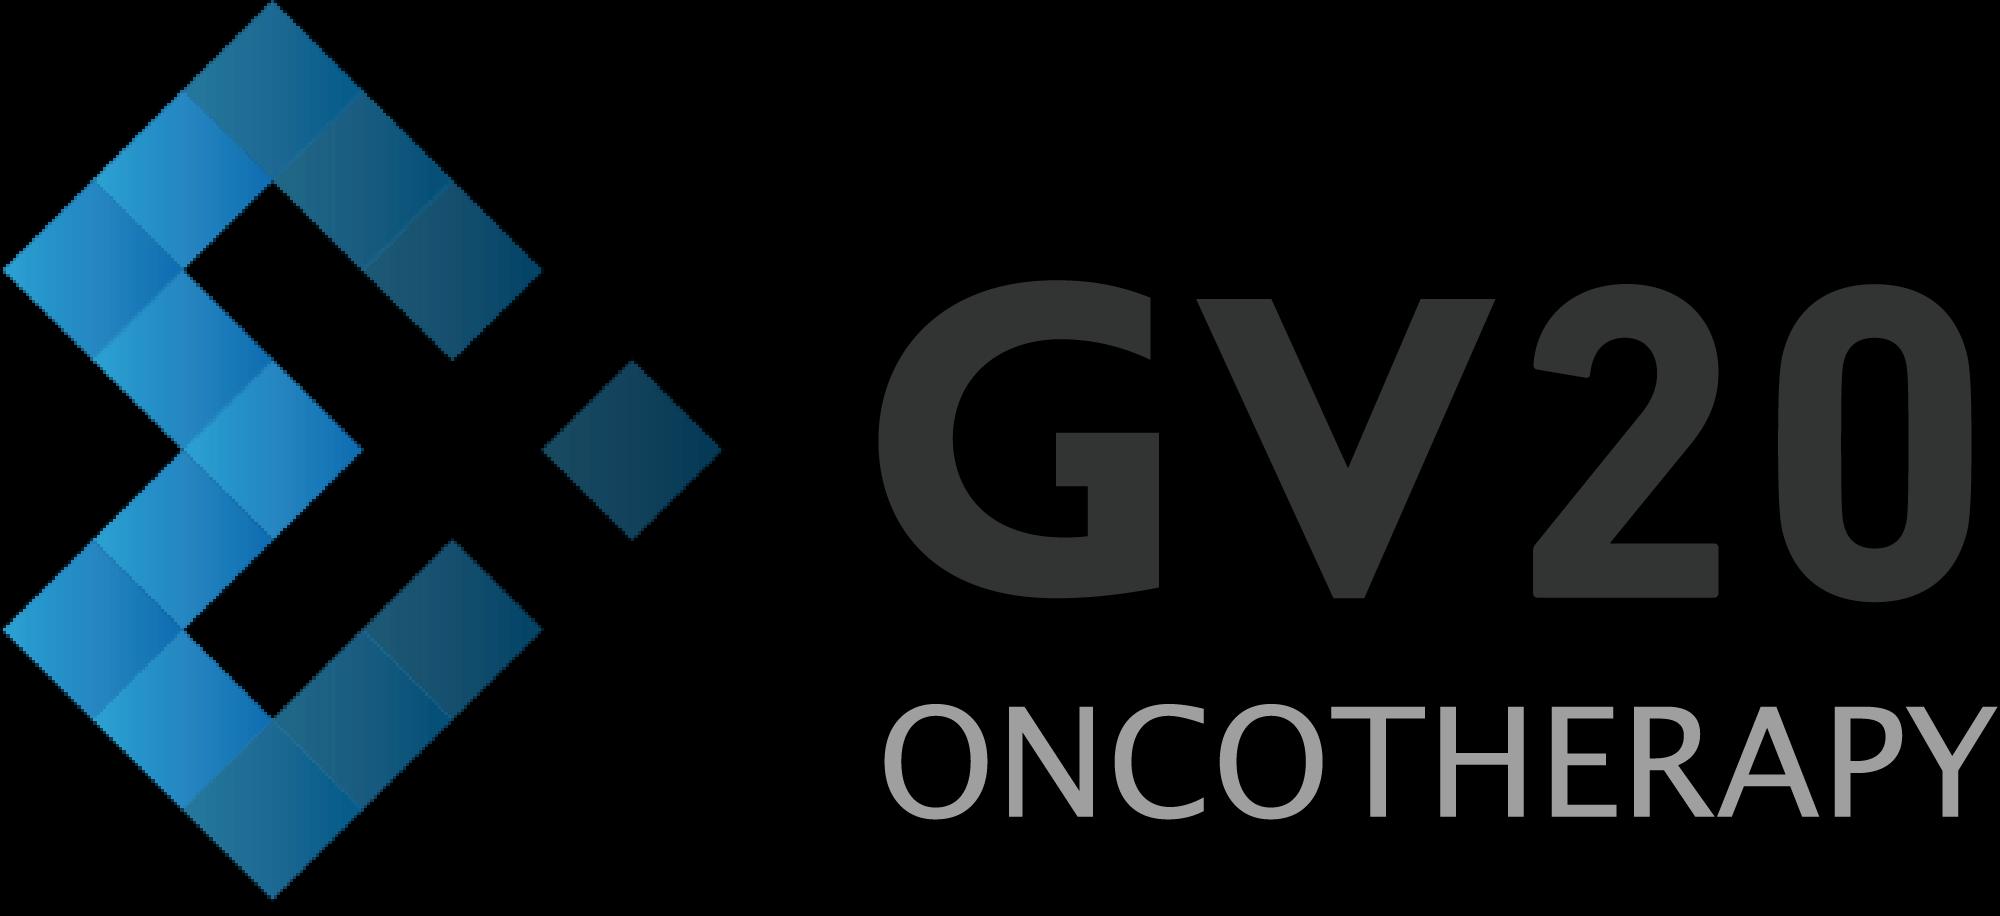 GV20 Oncotherapy (寻百会)_logo